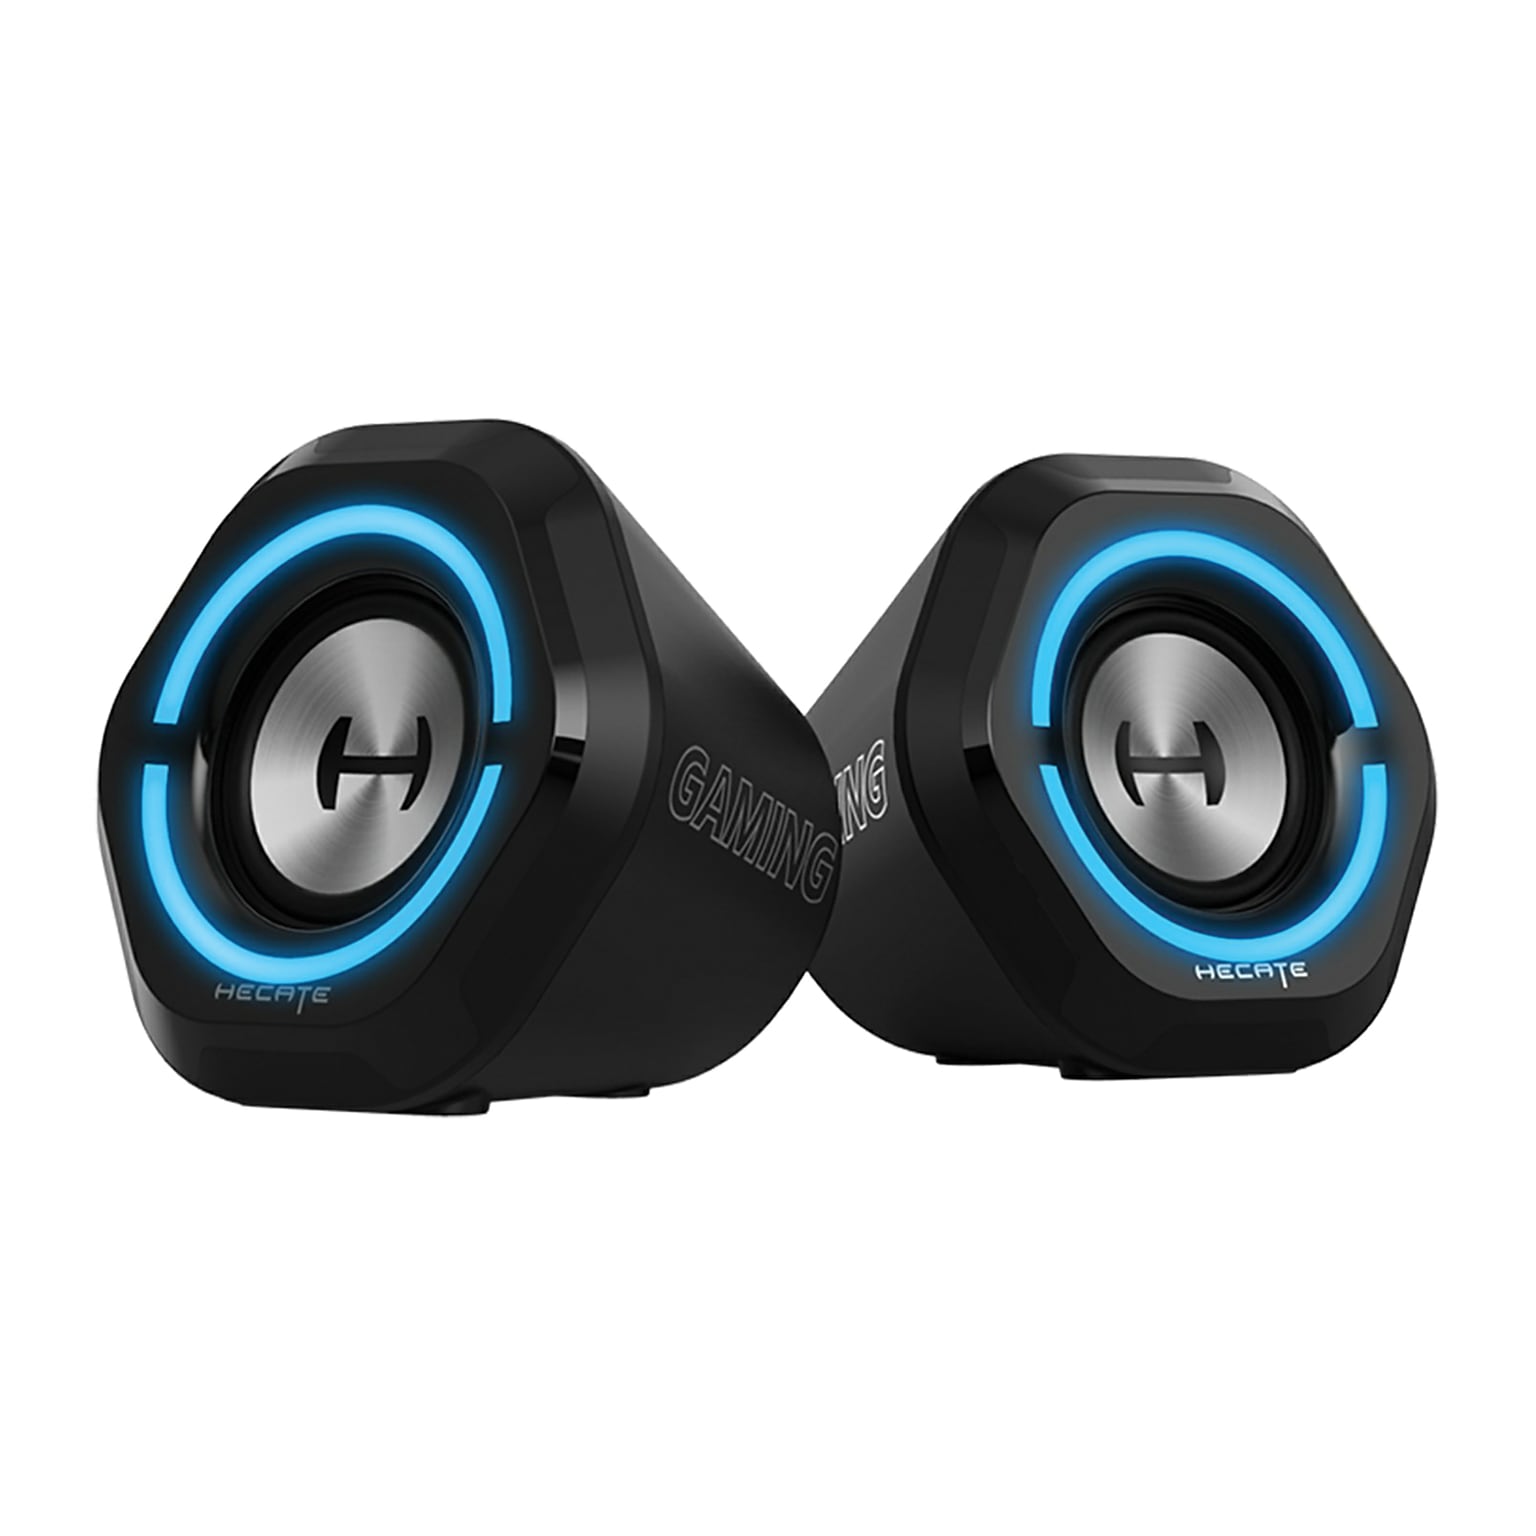 Edifier Hecate G1000 Wireless Bluetooth Gaming Stereo Speakers, Black (EEC4005572)